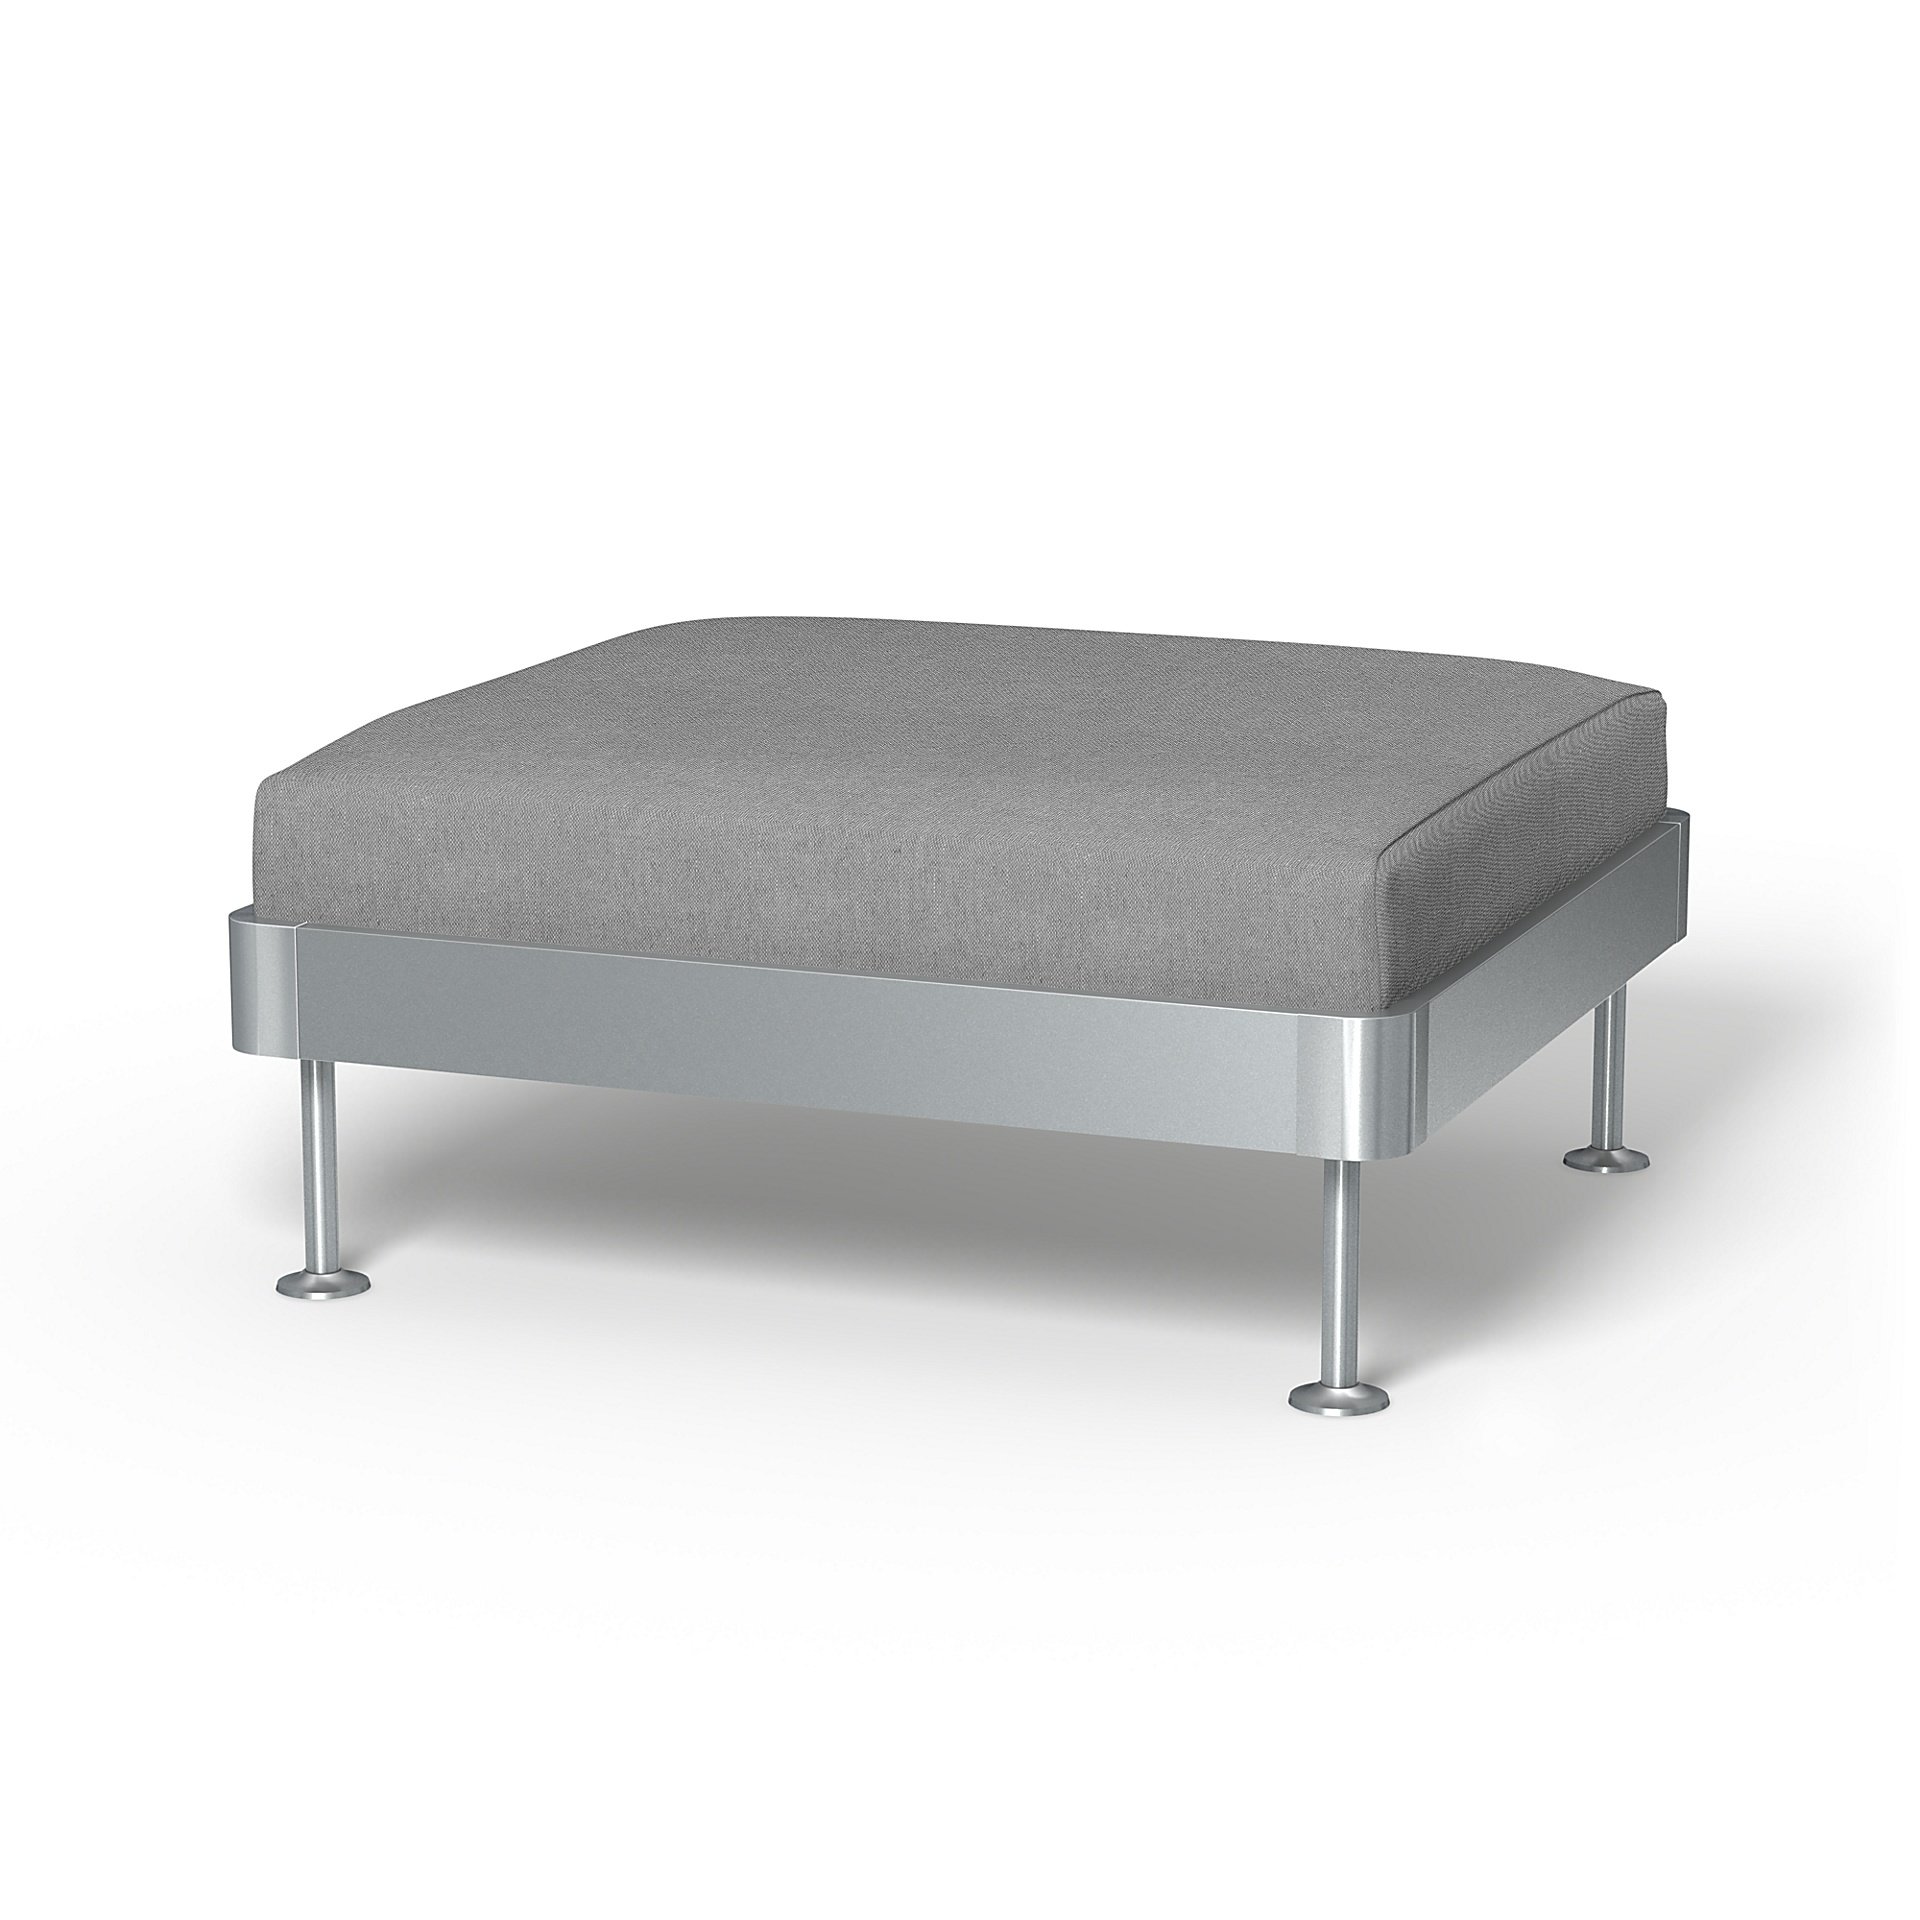 IKEA - Delaktig 1 Seat Platform Cover, Graphite, Linen - Bemz